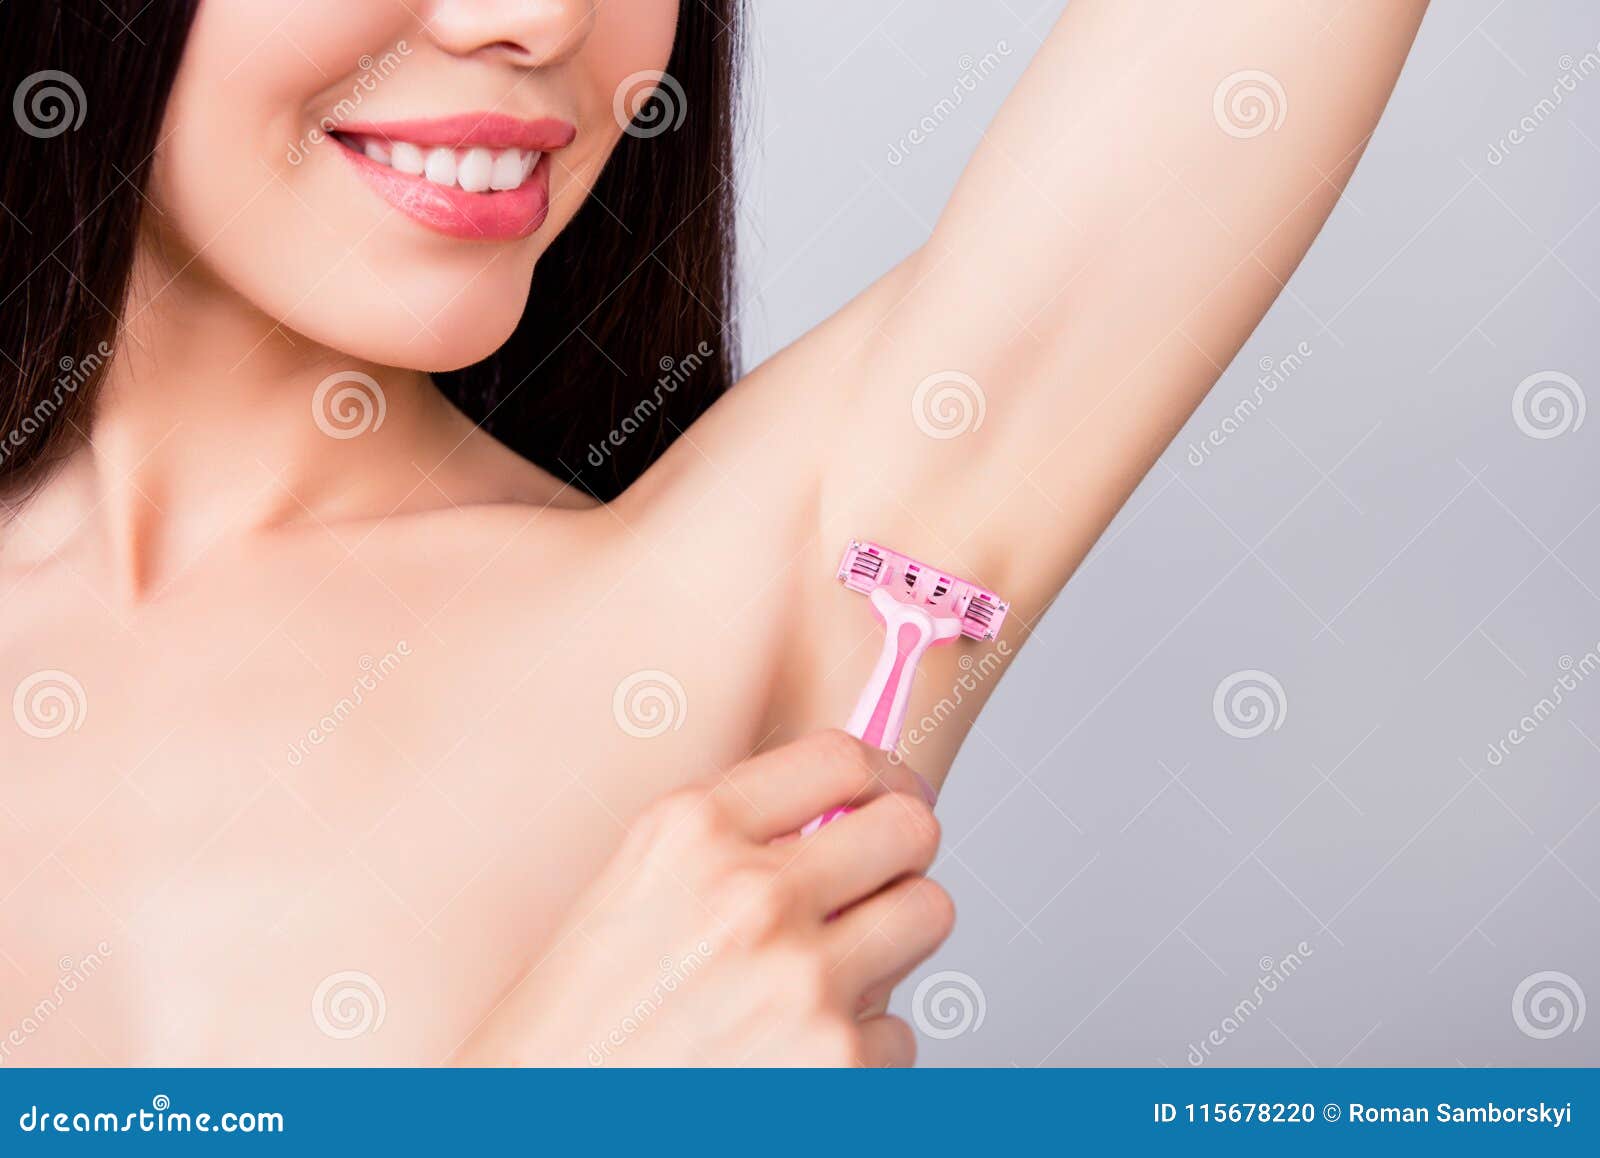 Armpit hair a growing trend for women  PIX11